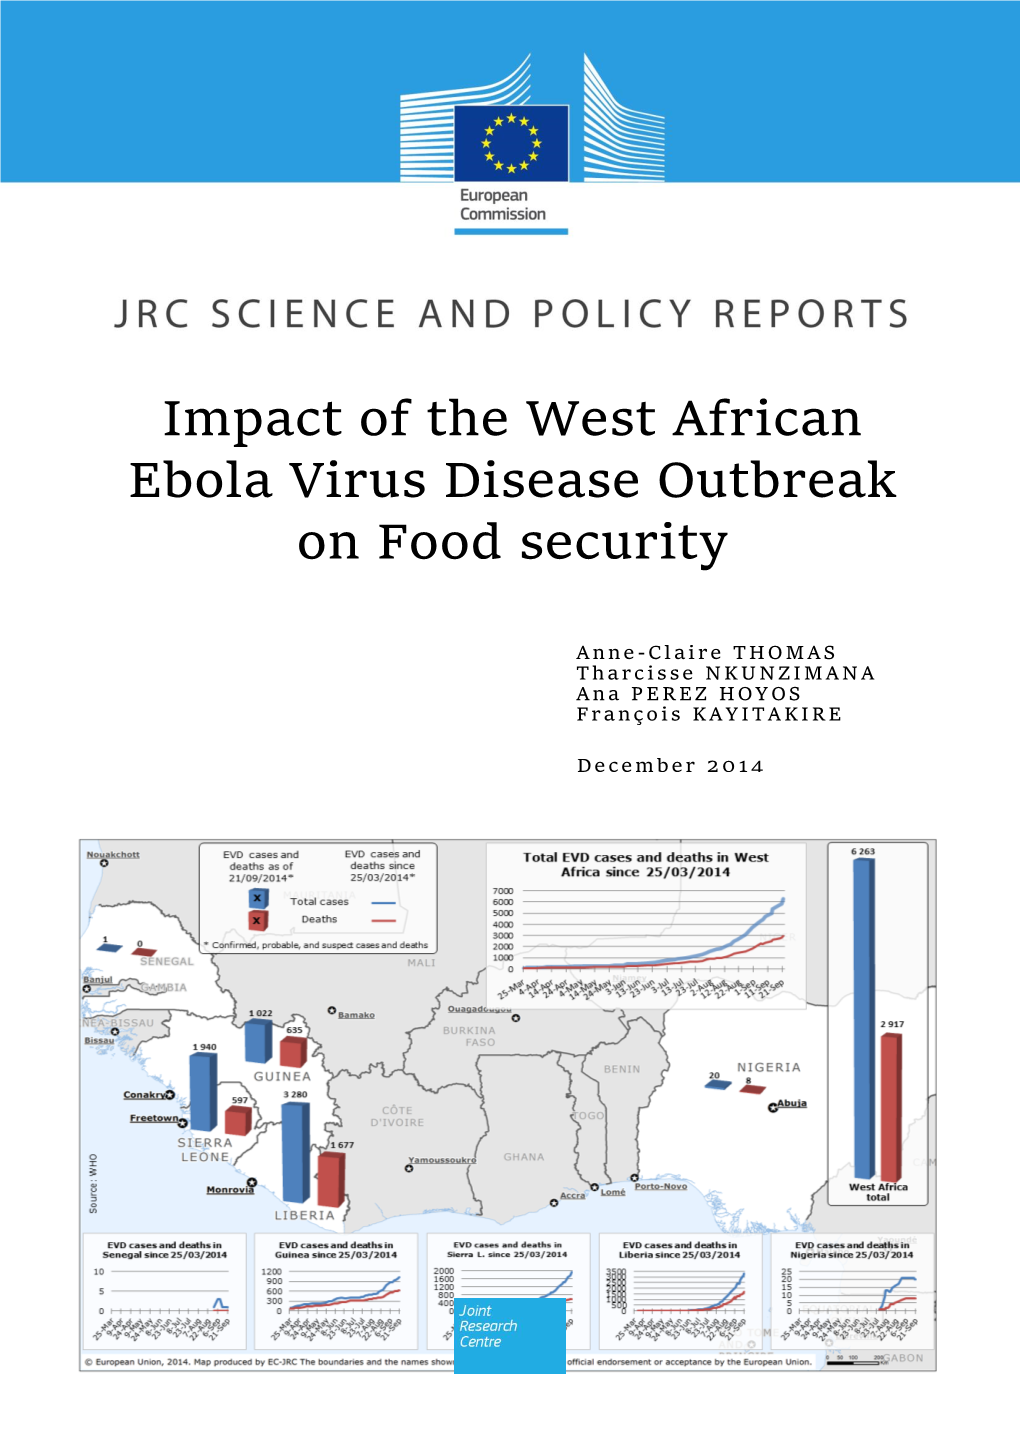 Impact of the West African Ebola Virus Disease Outbreak on Food Security